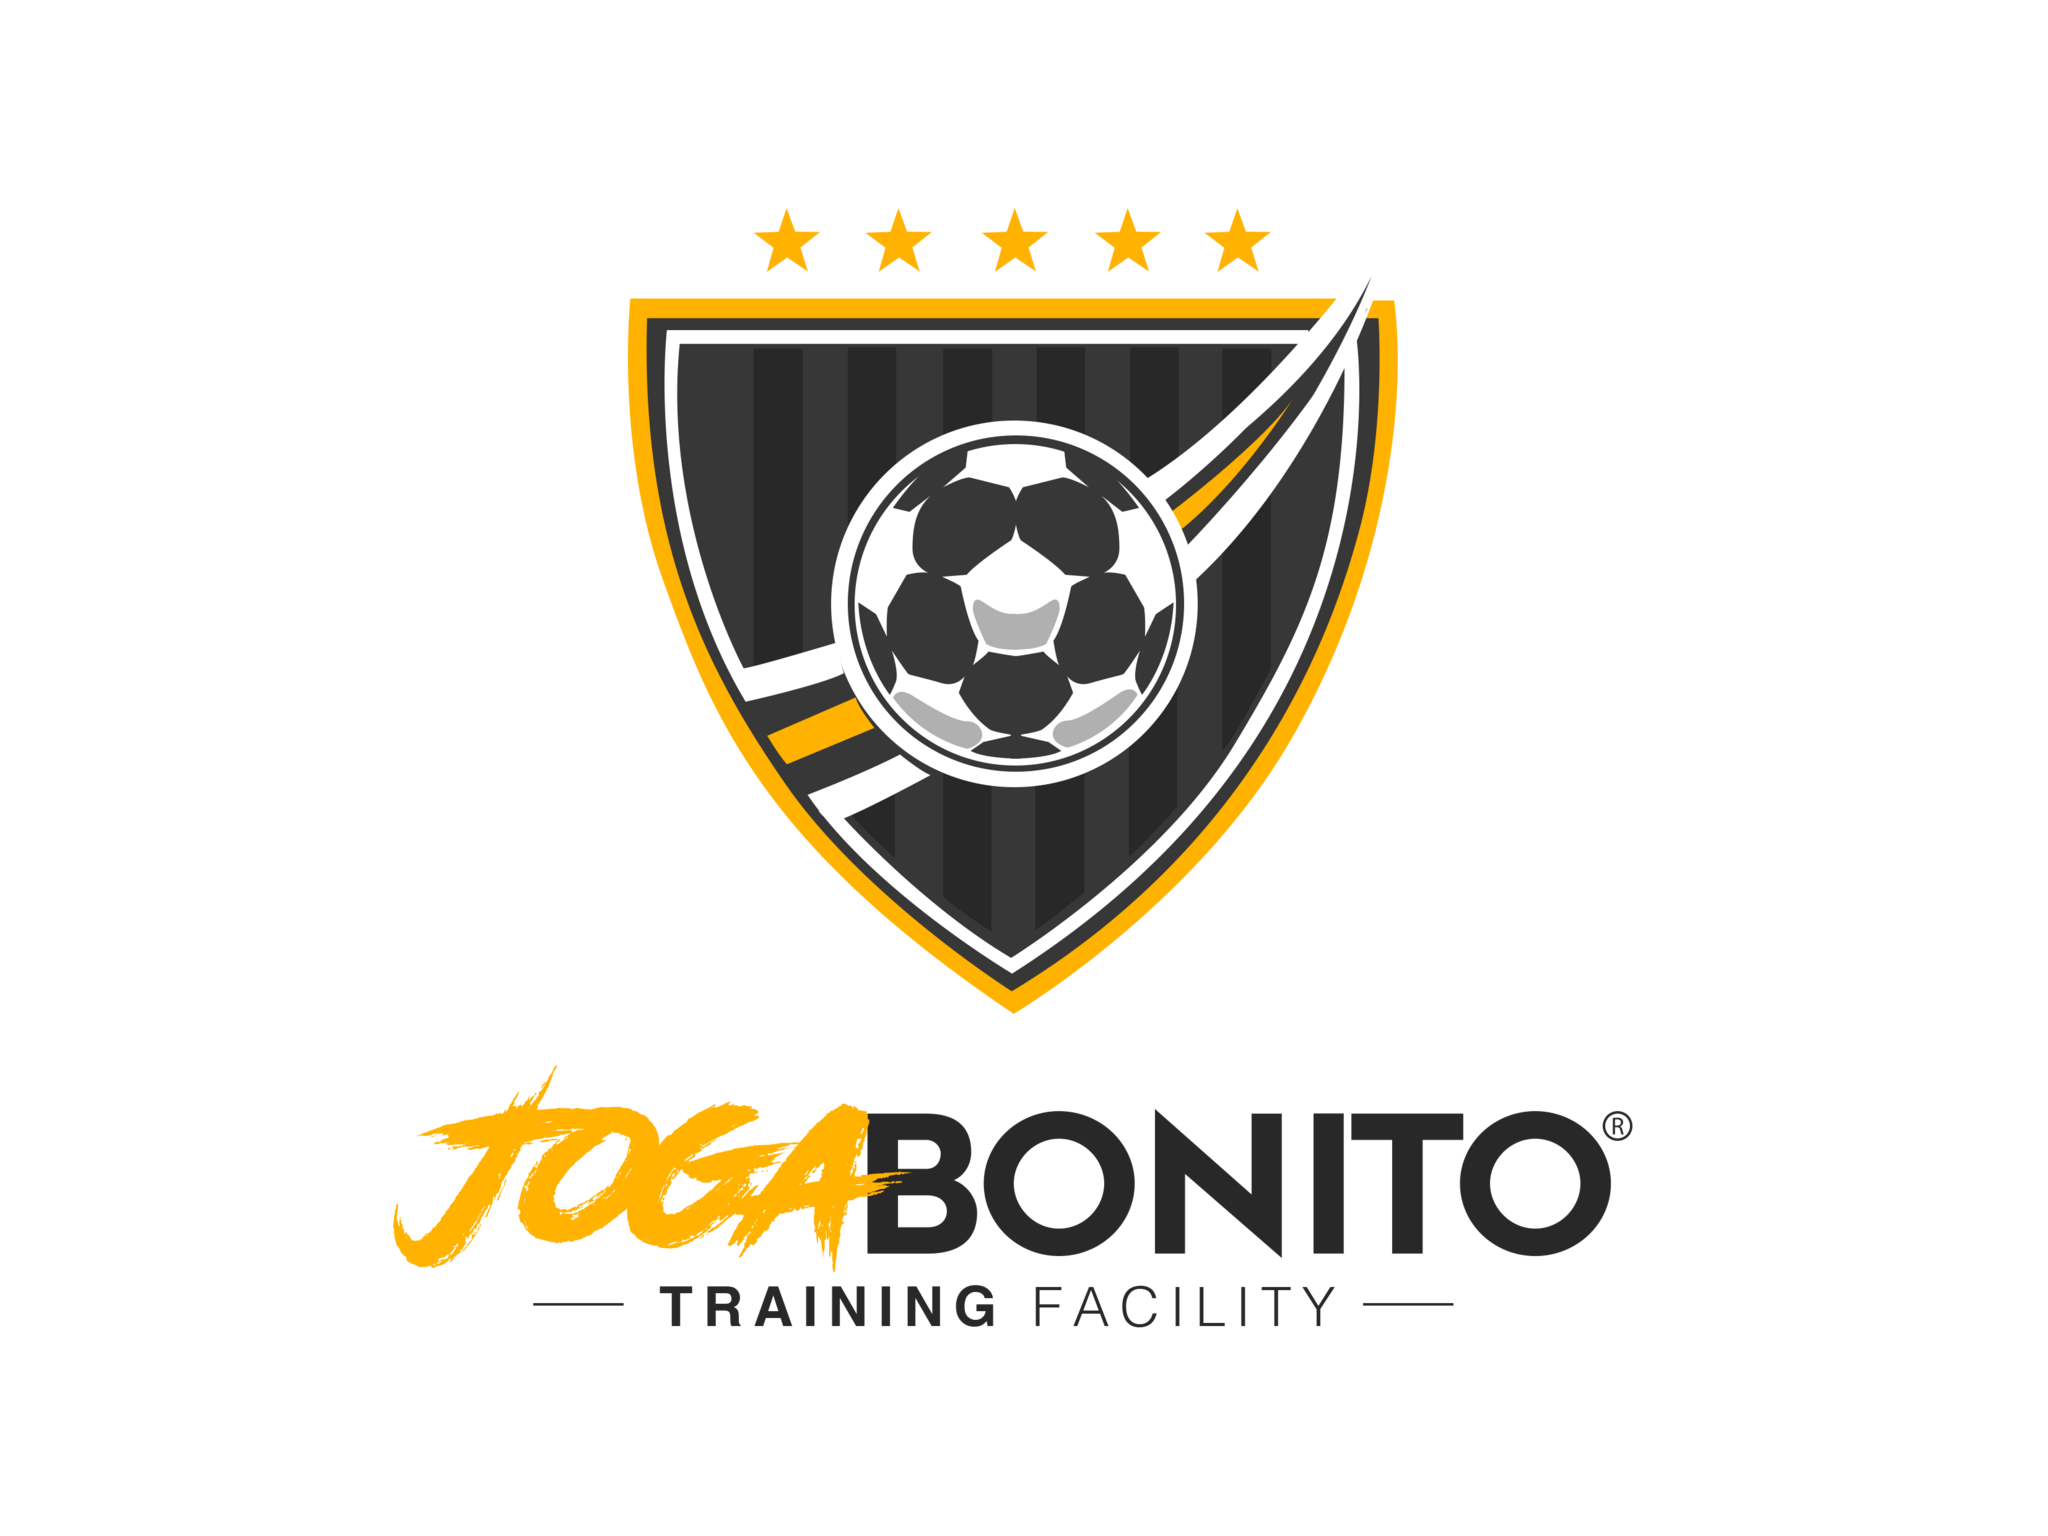 What happened with Joga Bonito? - Soccer HUB